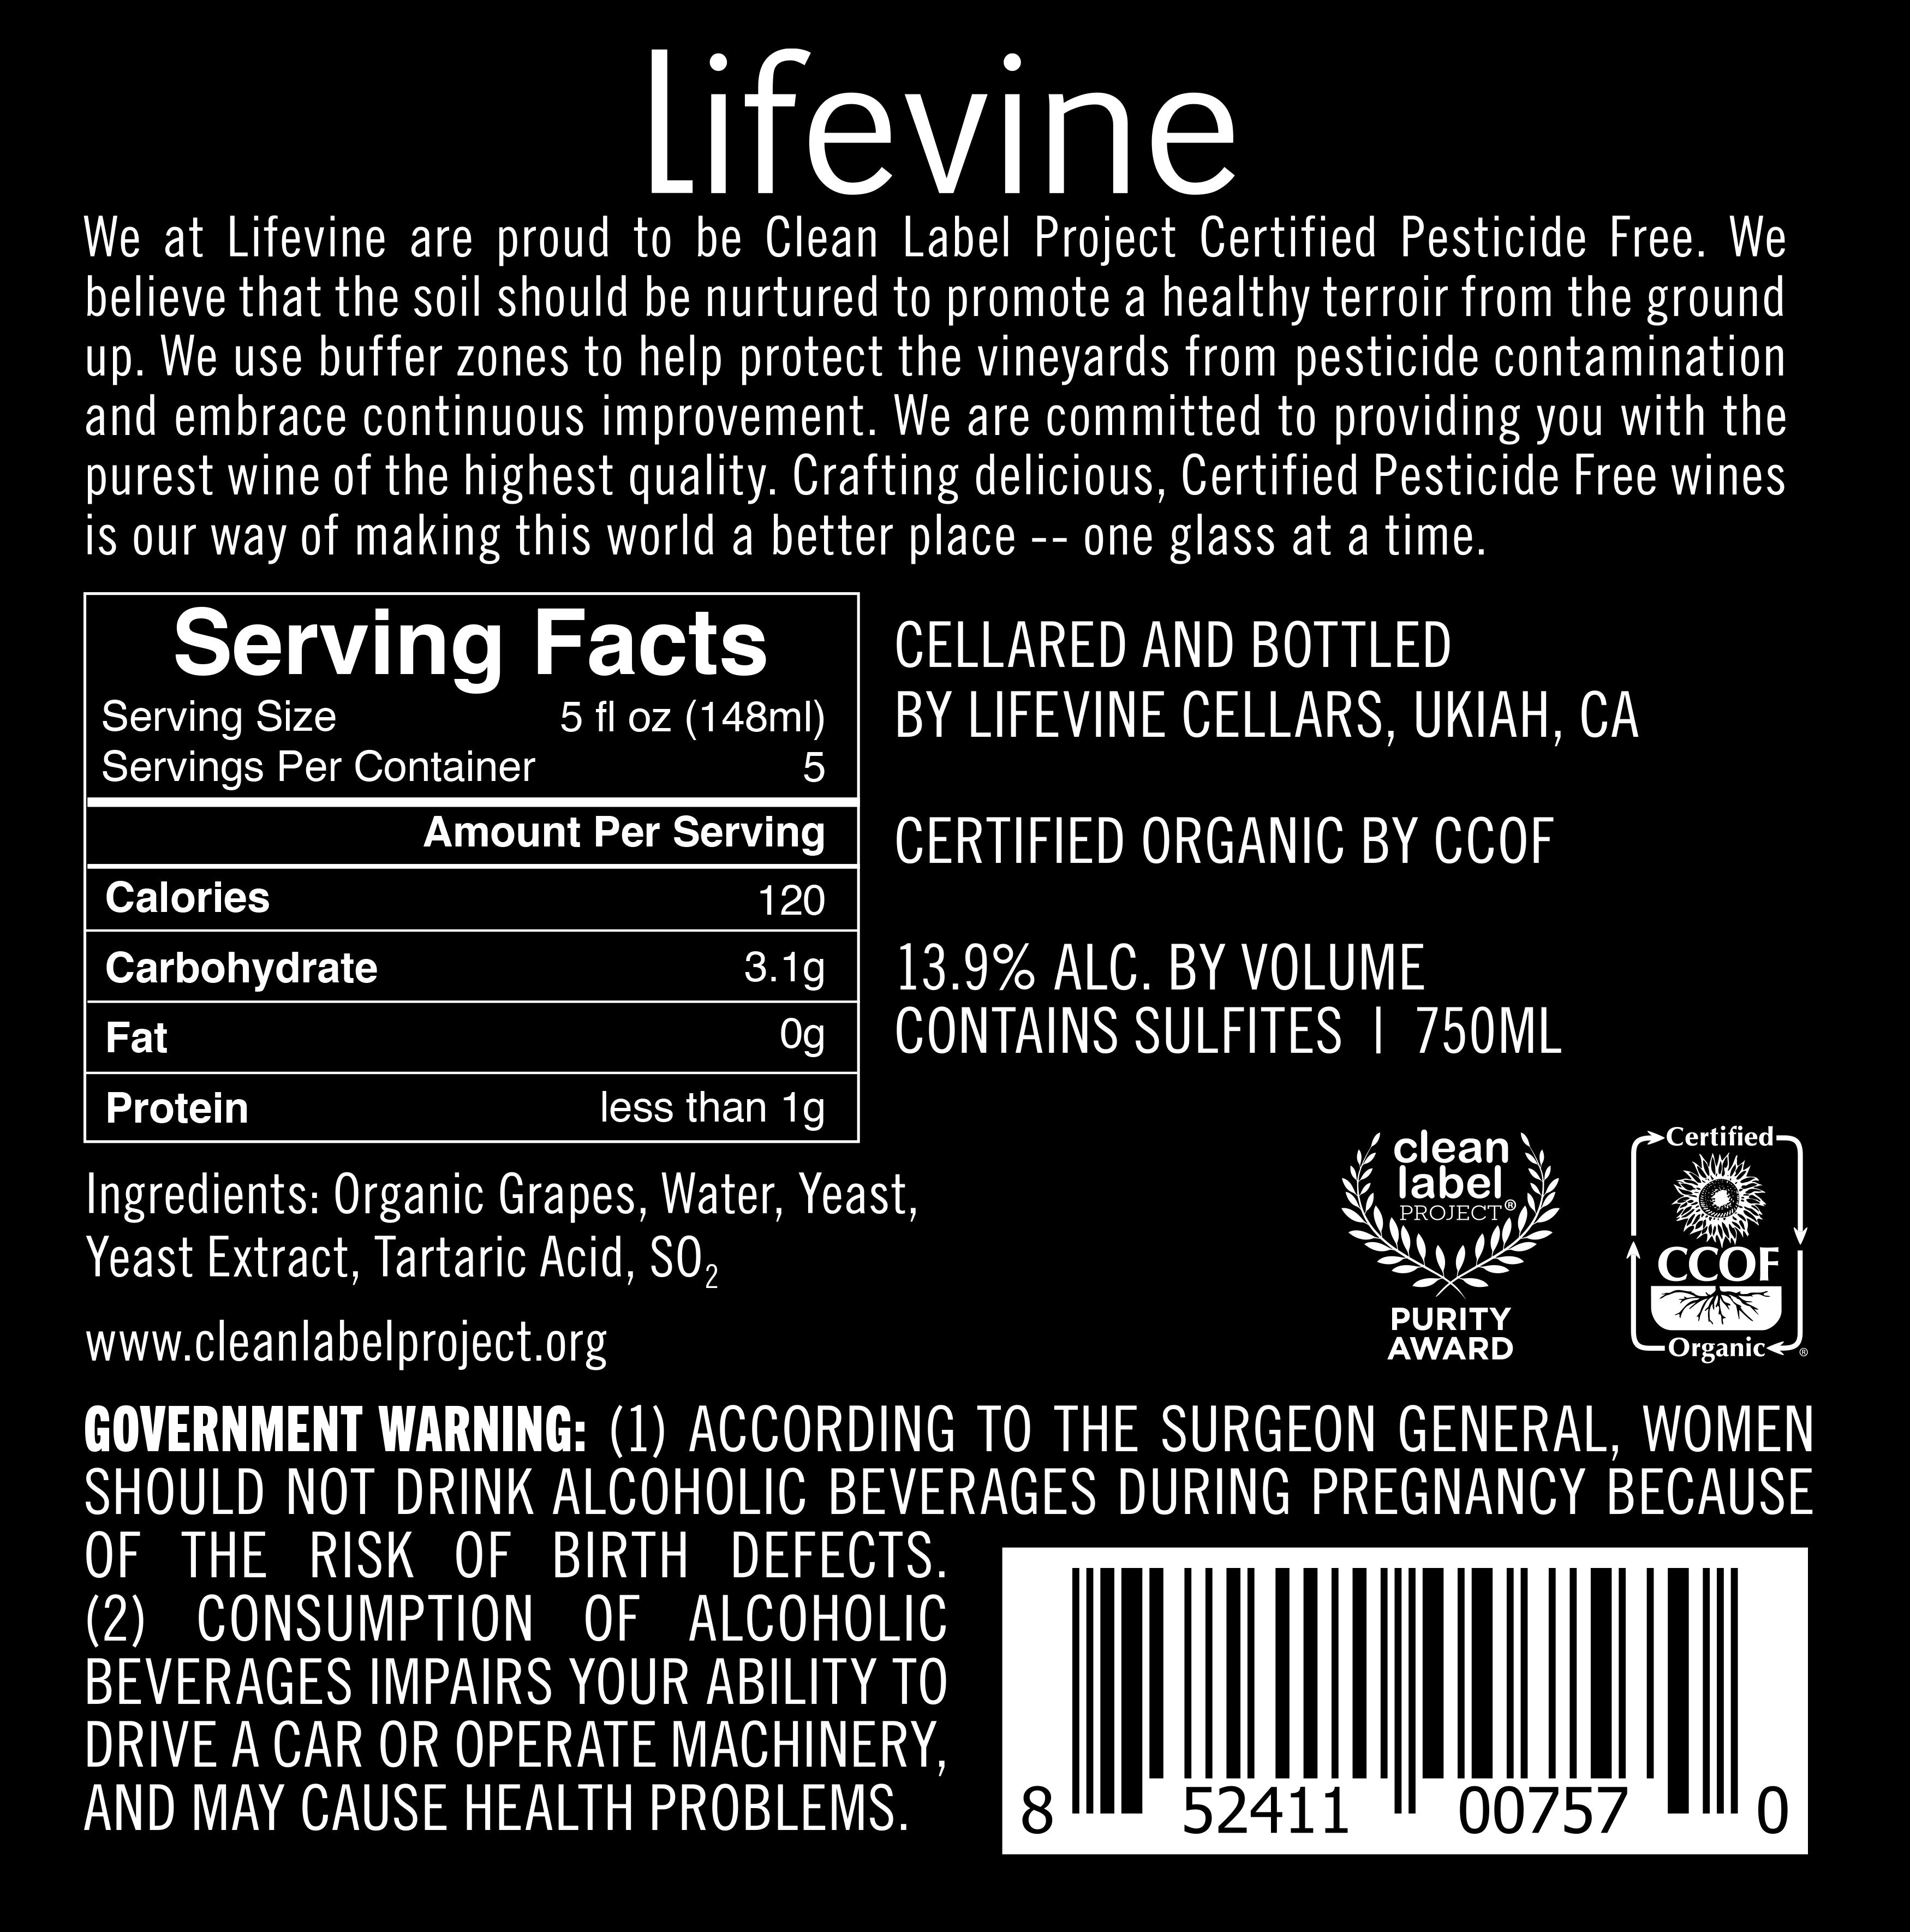 Lifevine 2022 Organic Chardonnay Lifevine California Zero Wines Sugar Award-Winning | – Wine